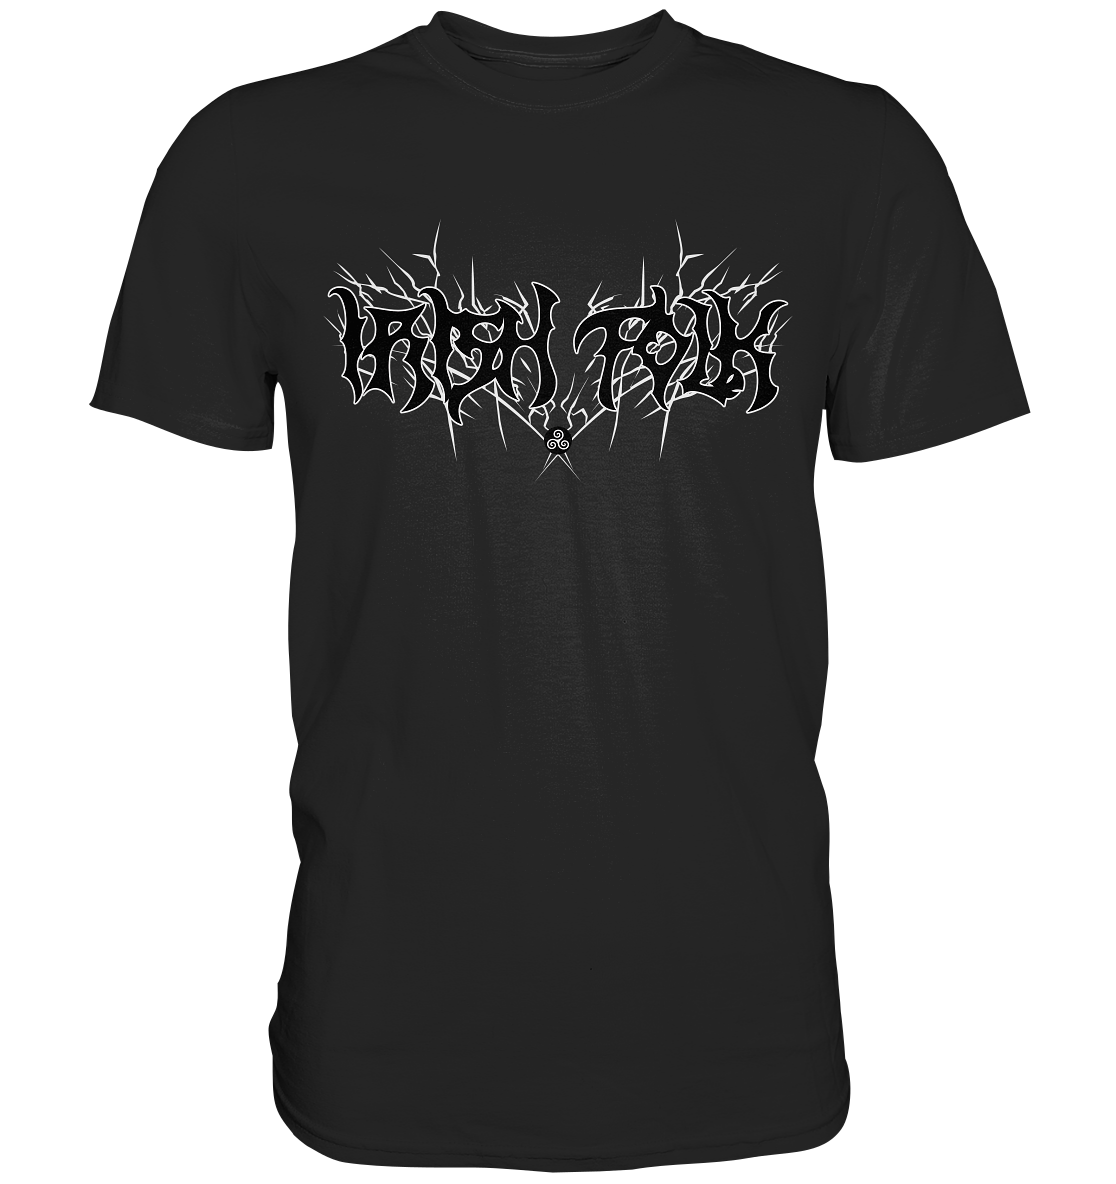 Irish Folk "Metal Band" - Premium Shirt